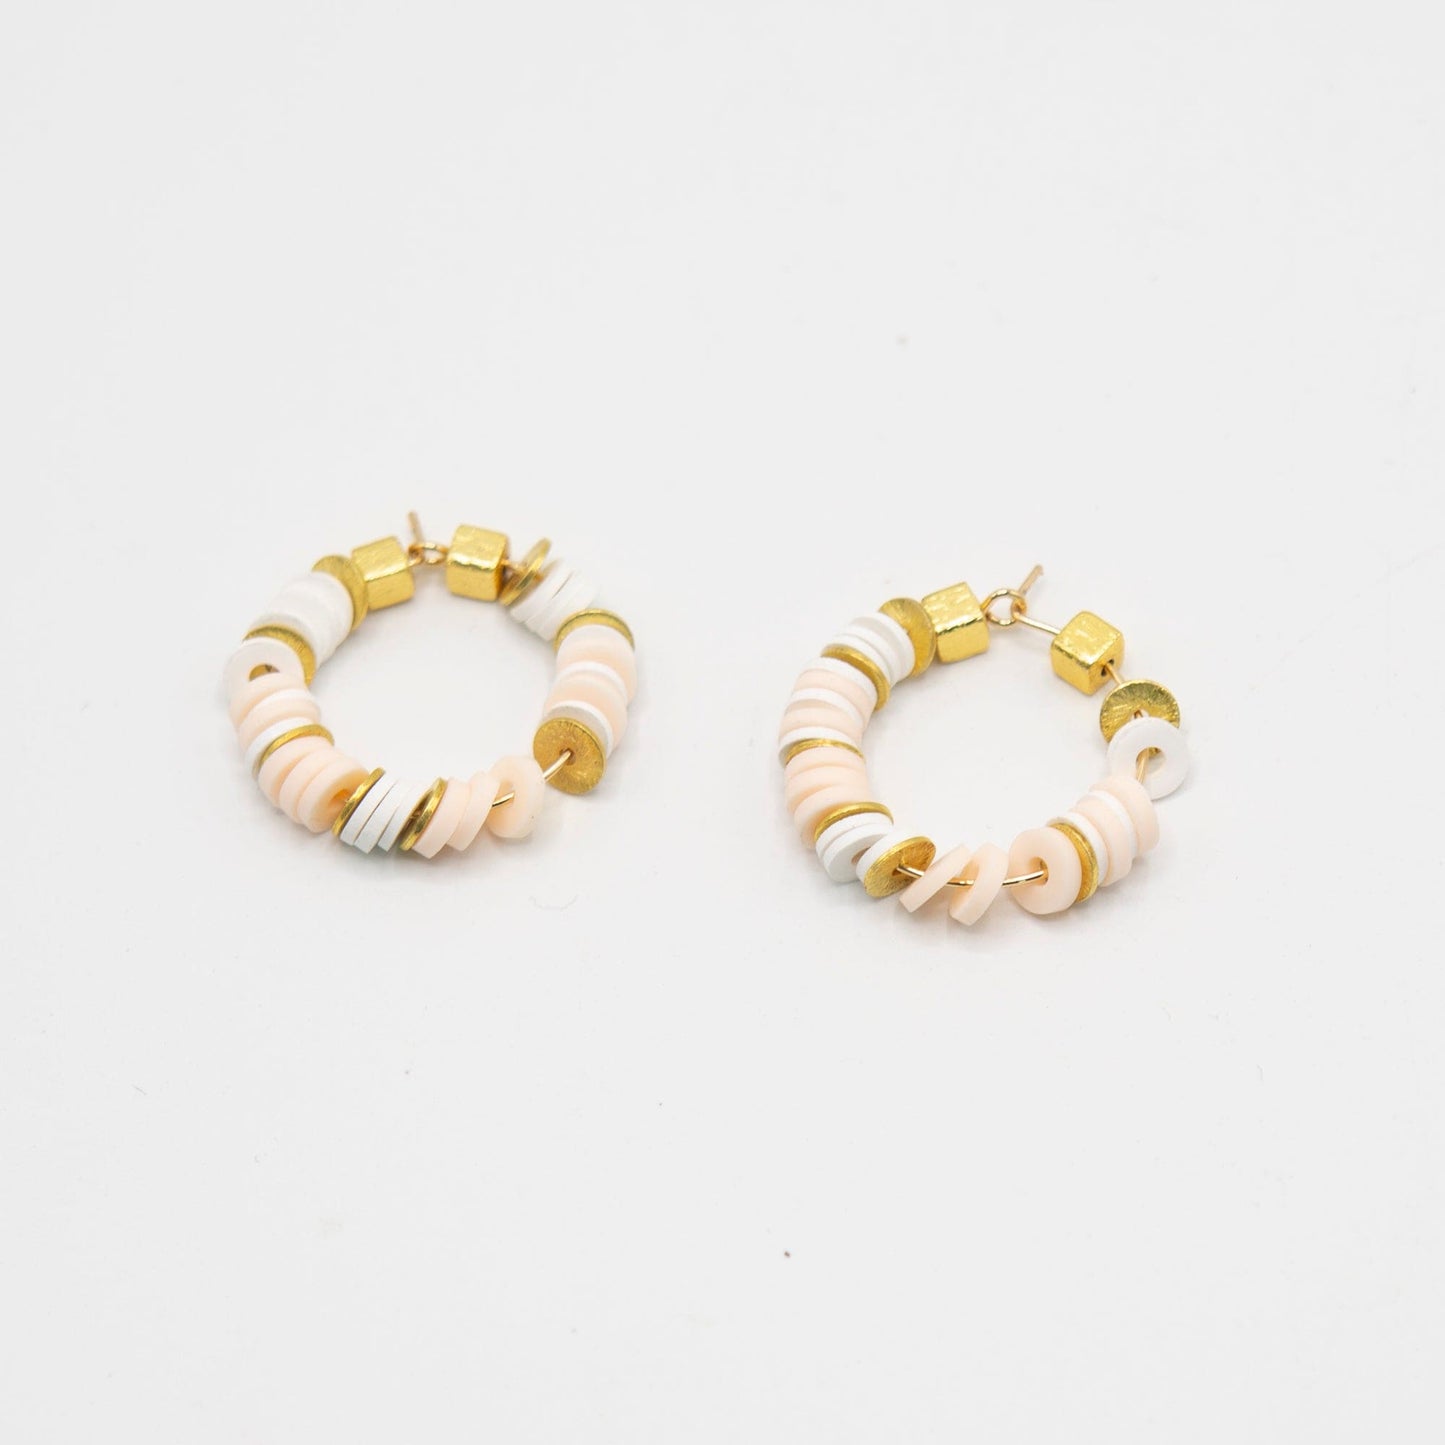 BEVERLY SMART Earrings Petites créoles de charme artisanal